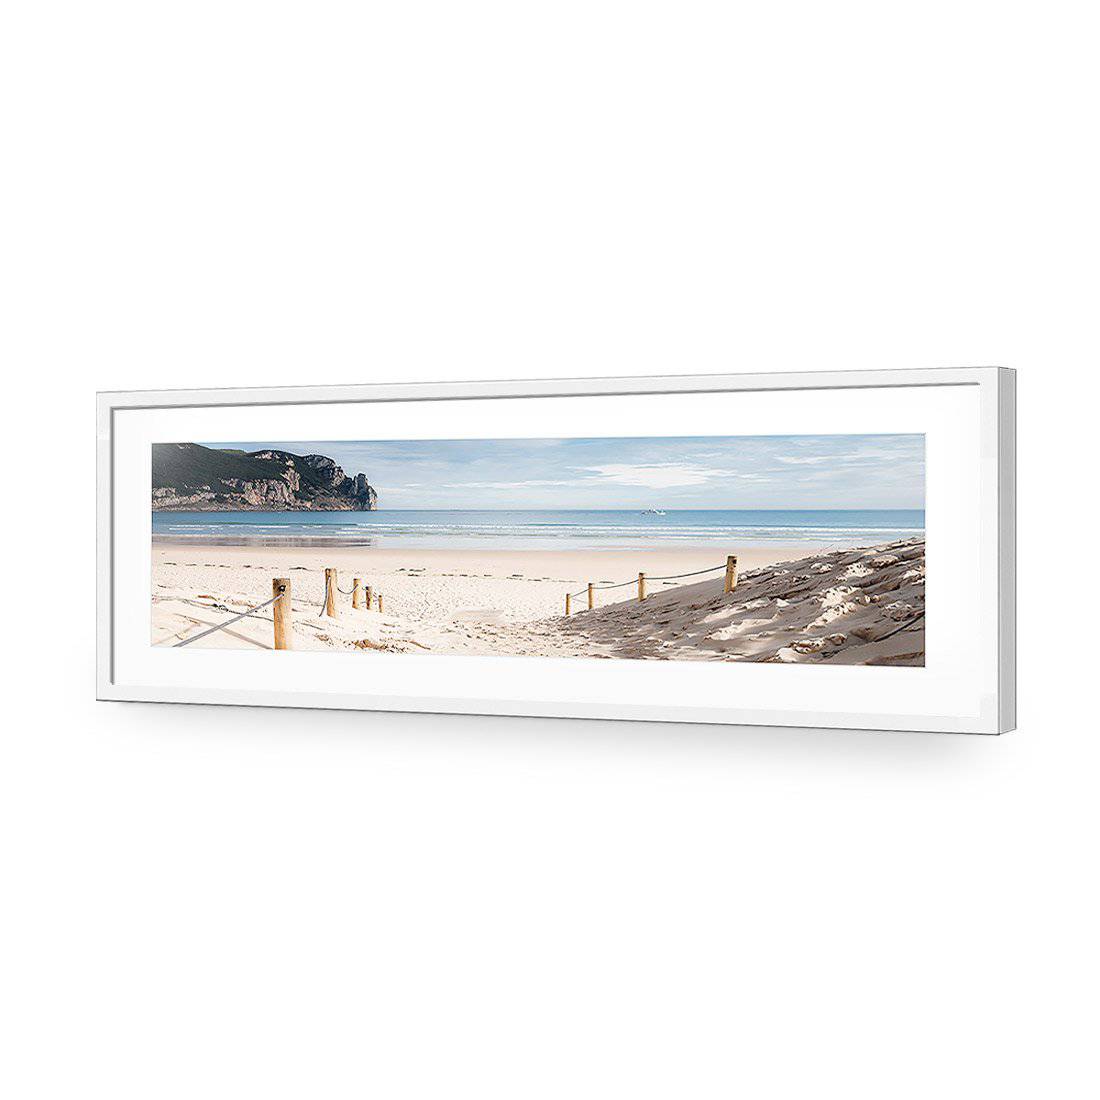 Tranquil Beach, Long-Acrylic-Wall Art Design-With Border-Acrylic - White Frame-60x20cm-Wall Art Designs